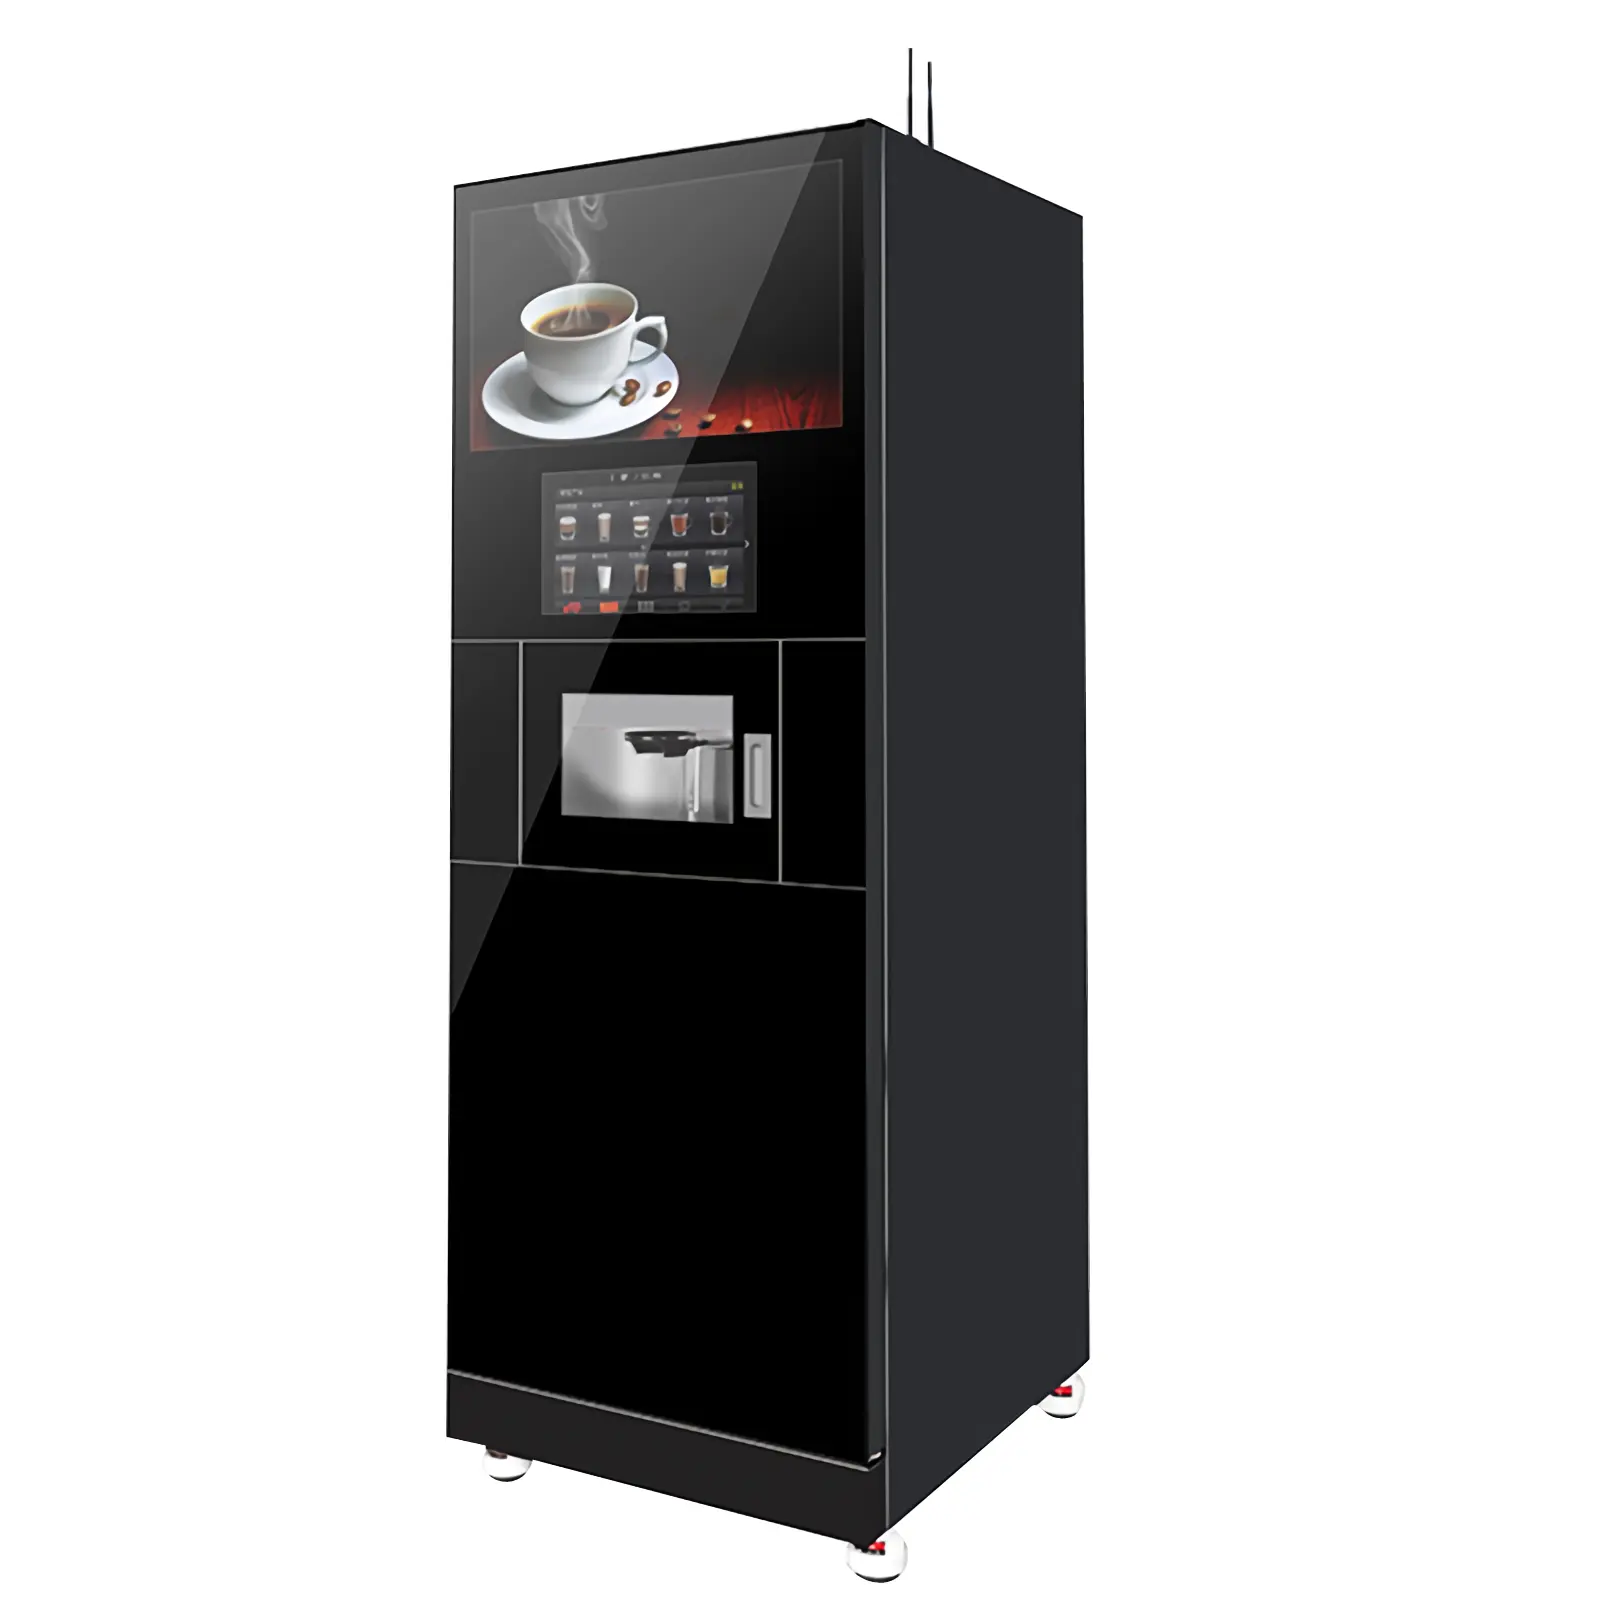 माइक्रोन पूरी तरह से स्वचालित वाणिज्यिक इटली ग्राइंडर एस्प्रेसो चाय कॉफी वेंडिंग मशीन